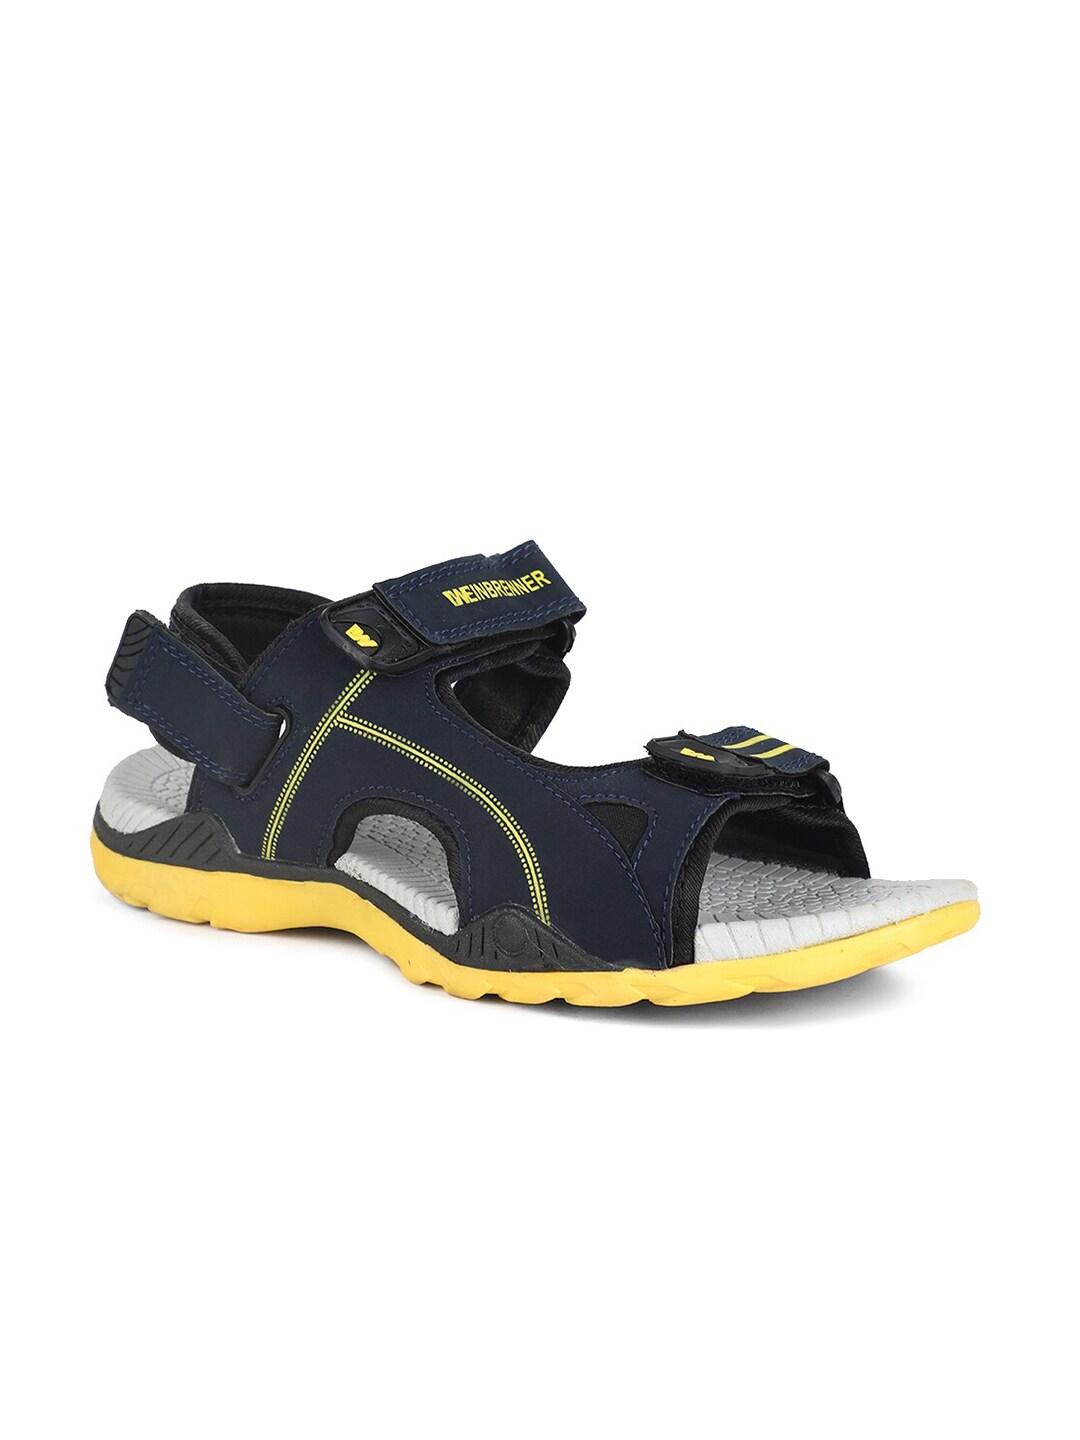 Bata Boys Blue & Yellow Comfort Sandals